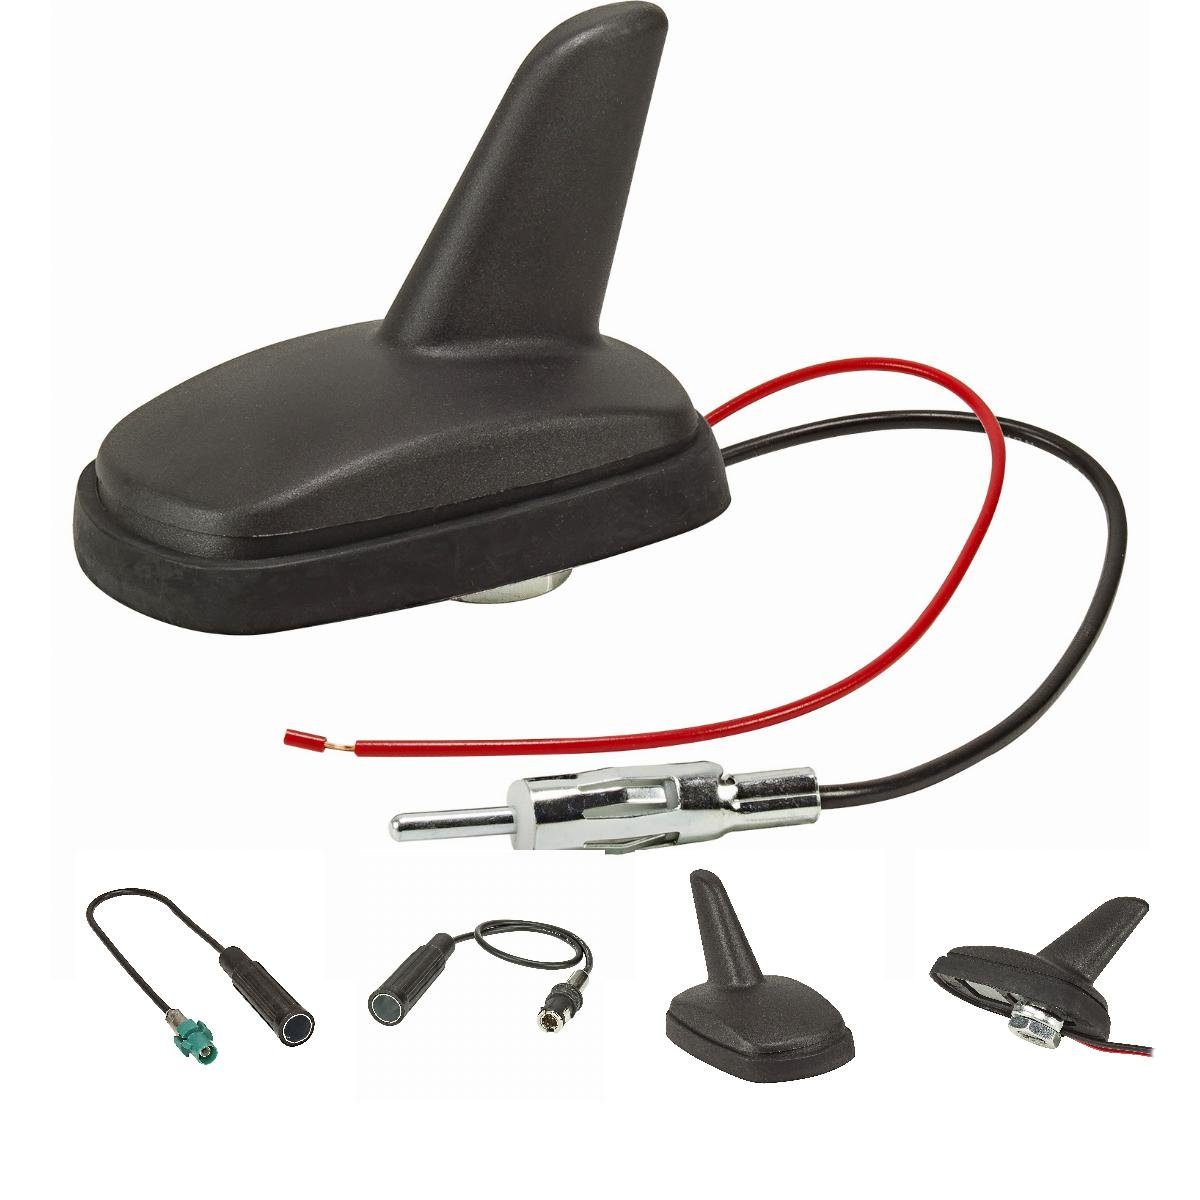 Shark Antenne für BMW Mini R50 R52 R53 Dachantenne Fakra FM